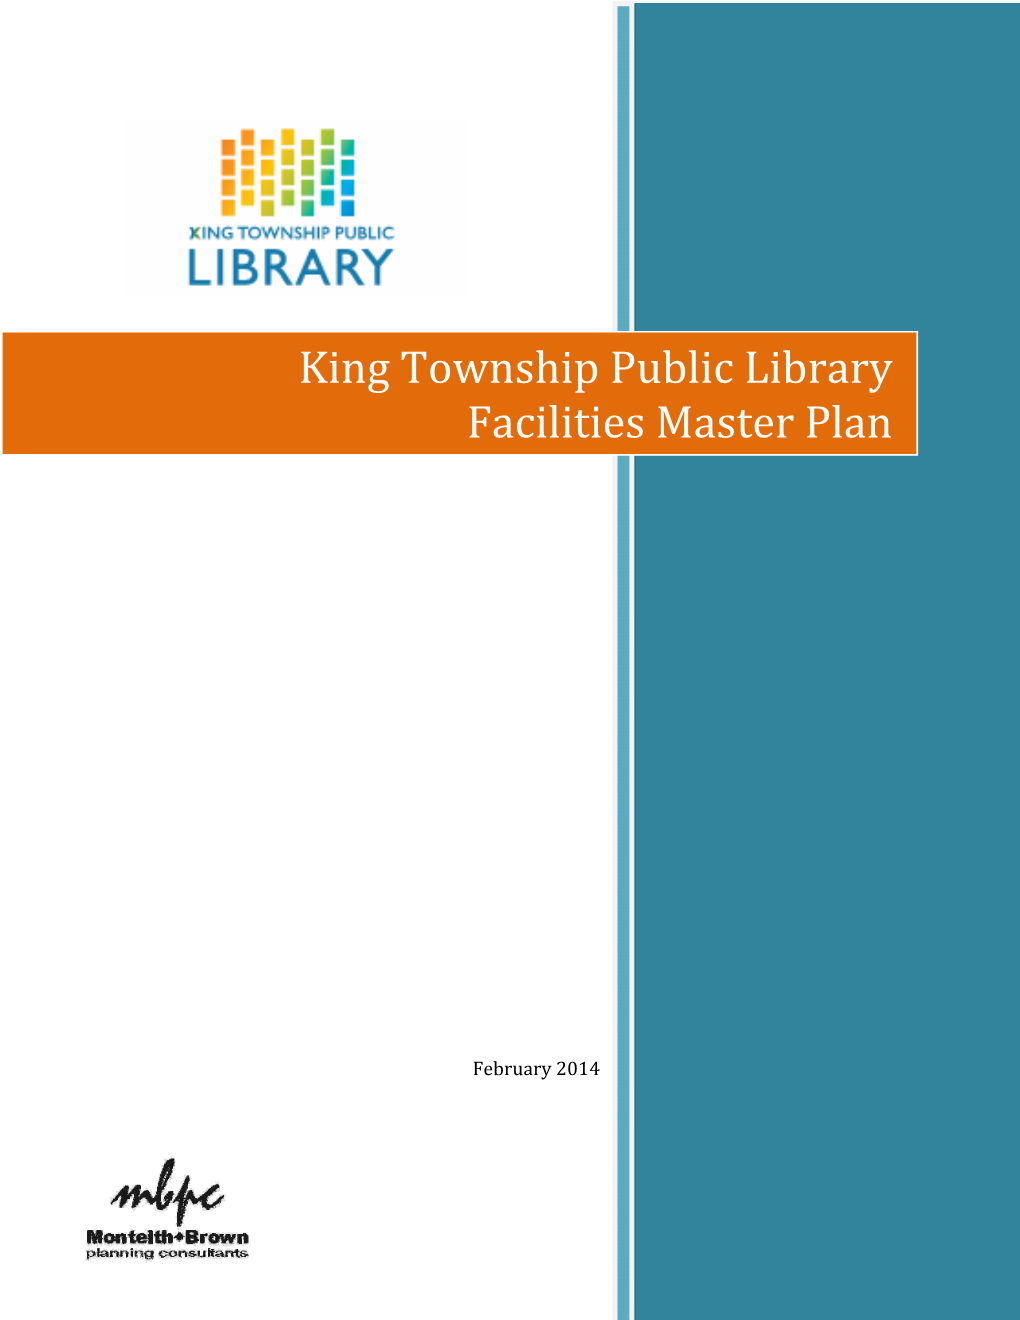 King Township Public Library Facilities Master Plan